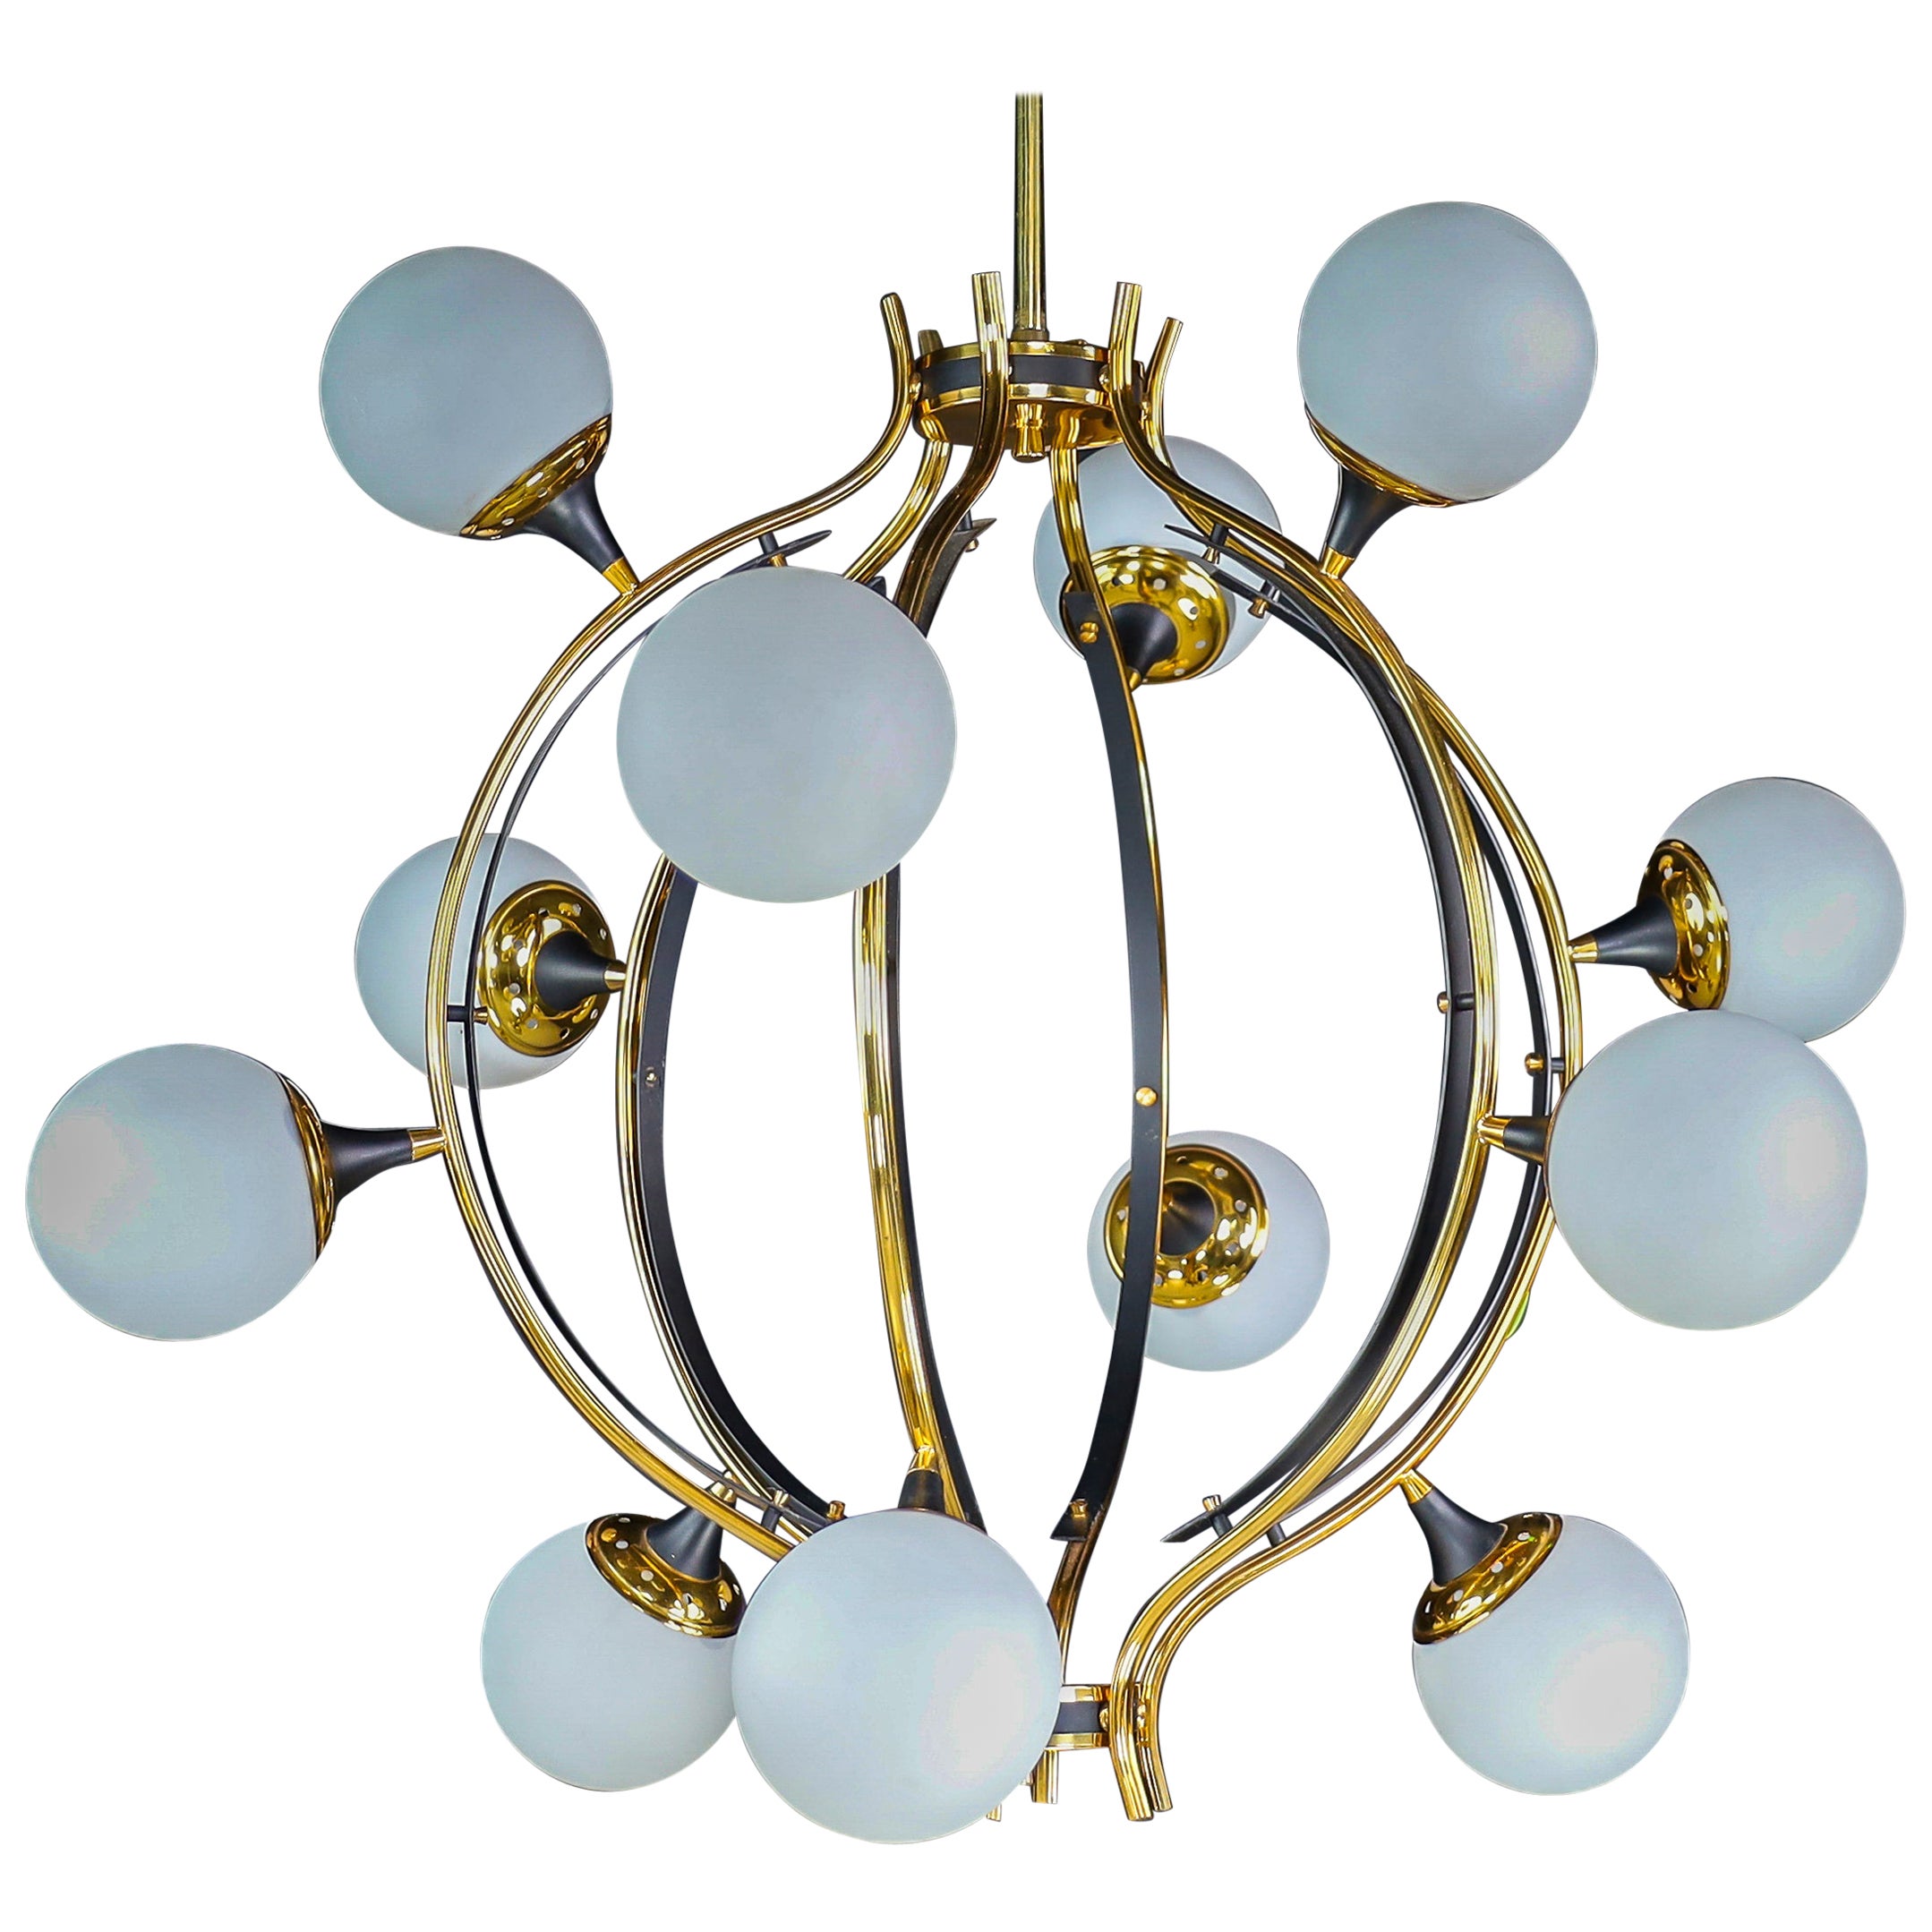 Midcentury Stilnovo Chandelier in Brass and 12 Opaline Globes, Italy 1950s